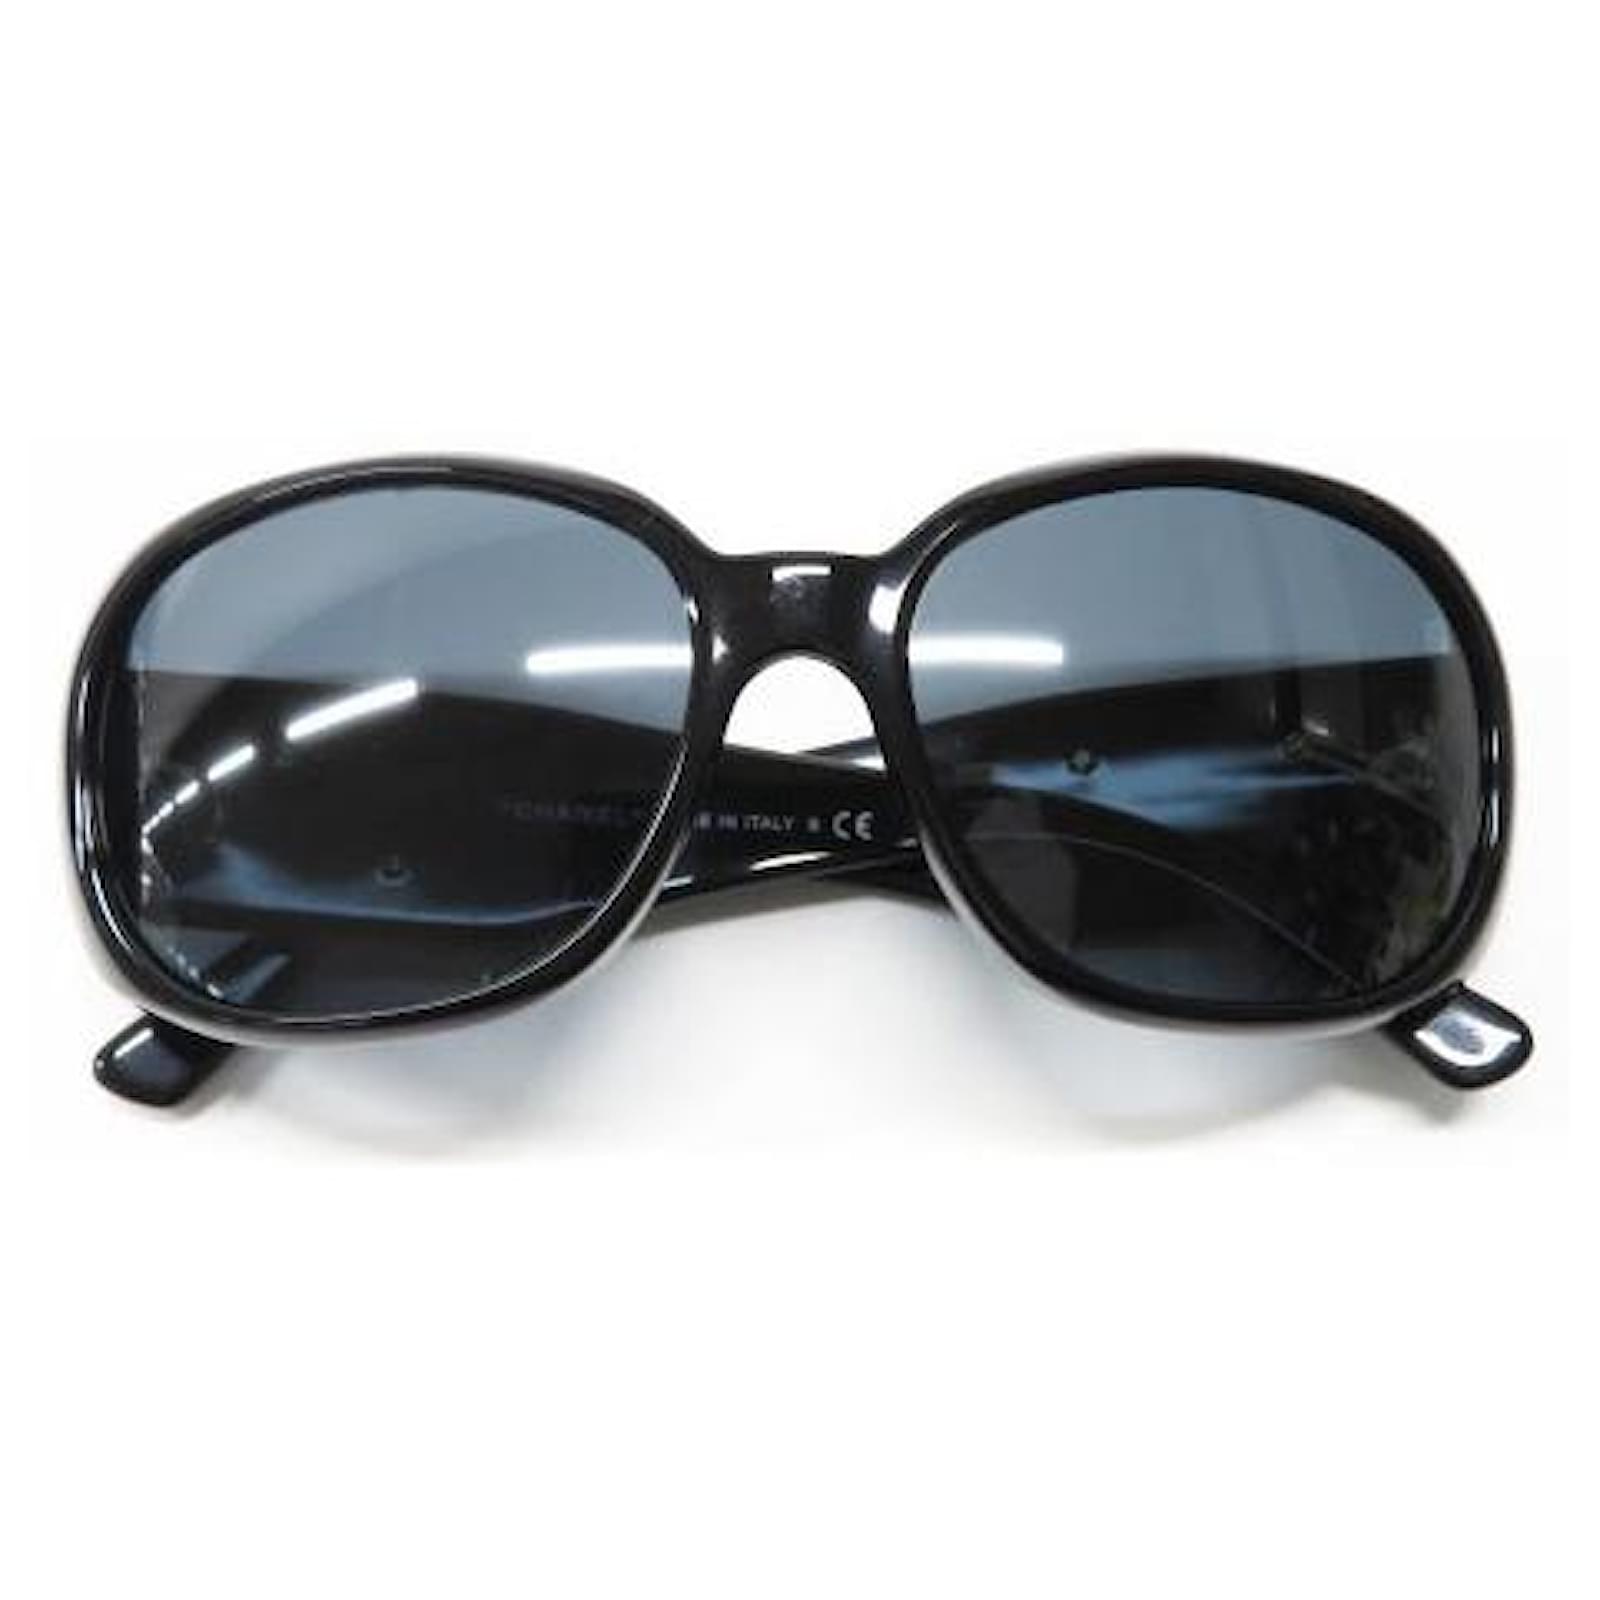 Used] CHANEL 5113-A Sunglasses Camellia Black 56 x 16 130 Plastic